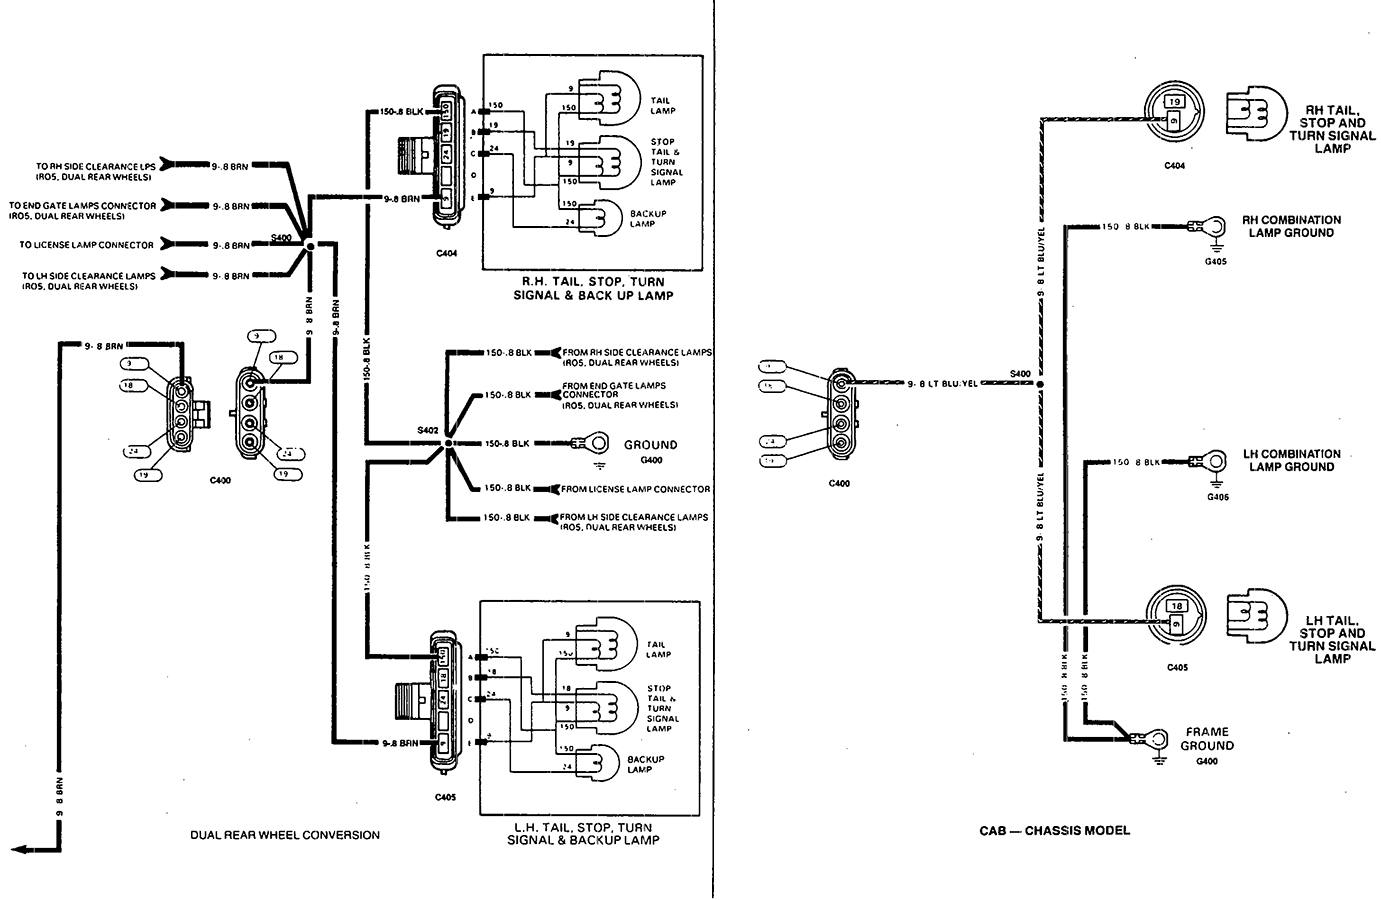 Chevy Truck Backup Light Wiring | Wiring Diagram - Reverse Light Wiring Diagram